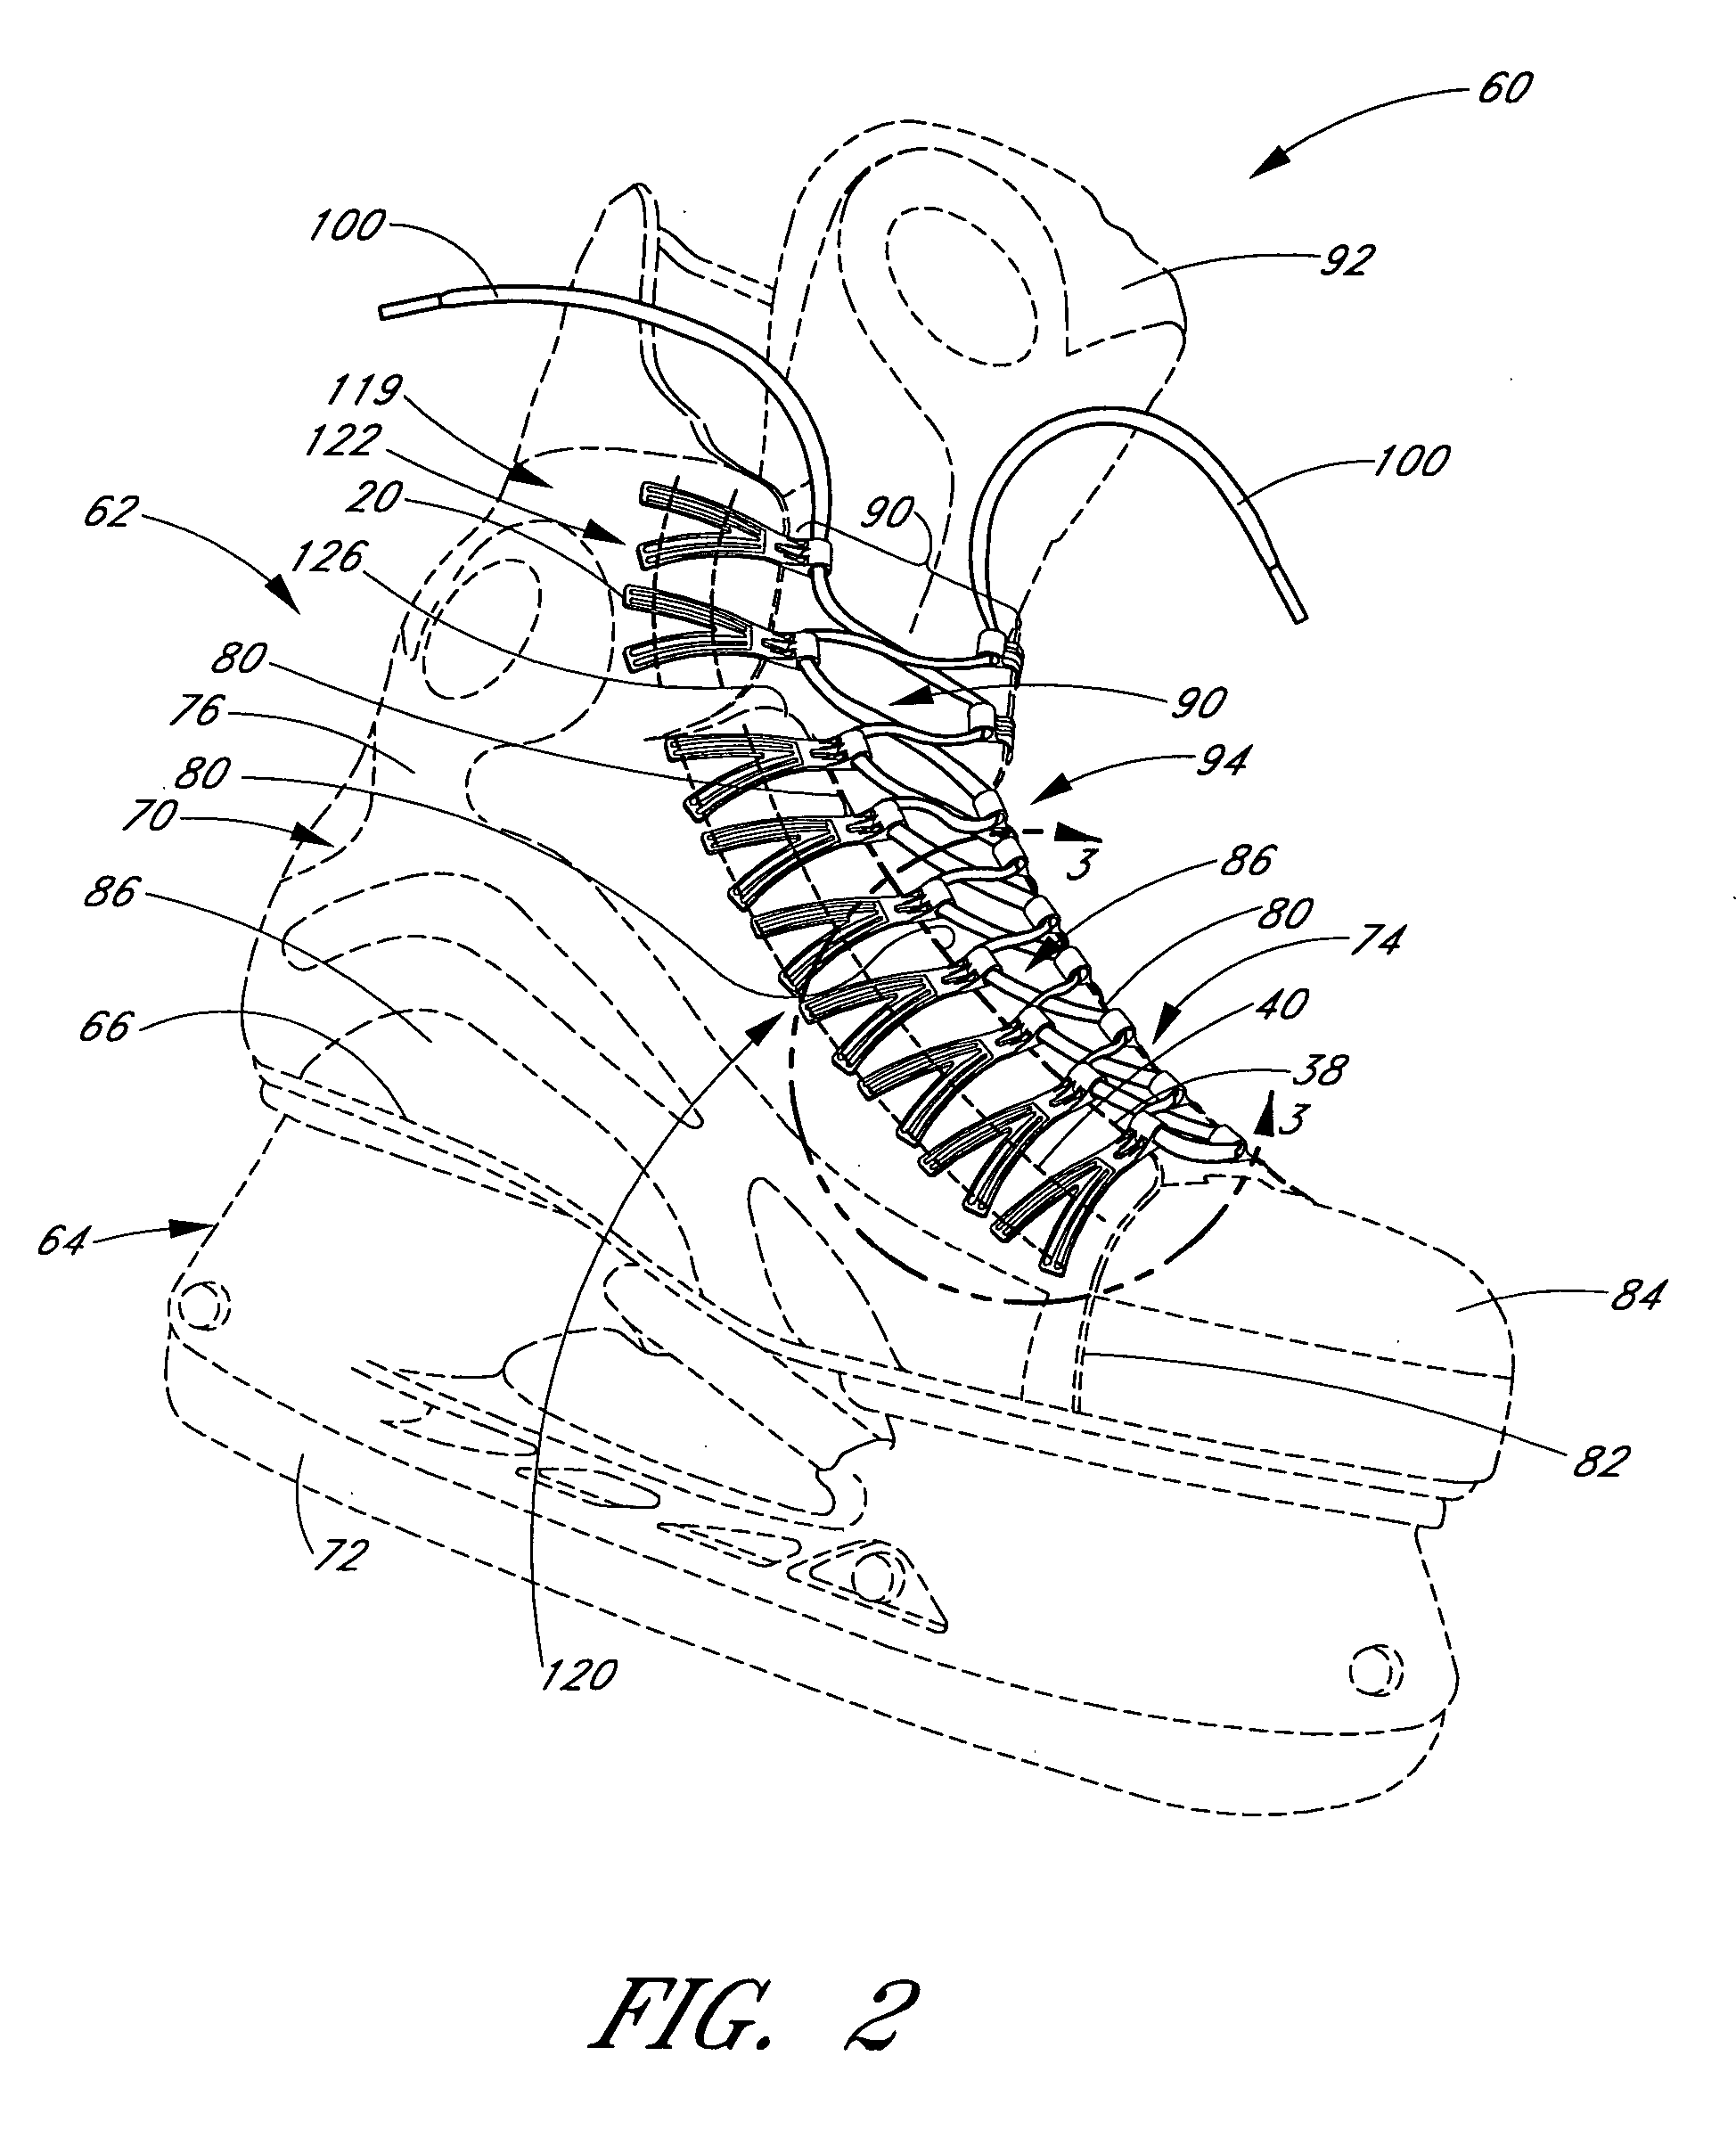 Footwear closure system